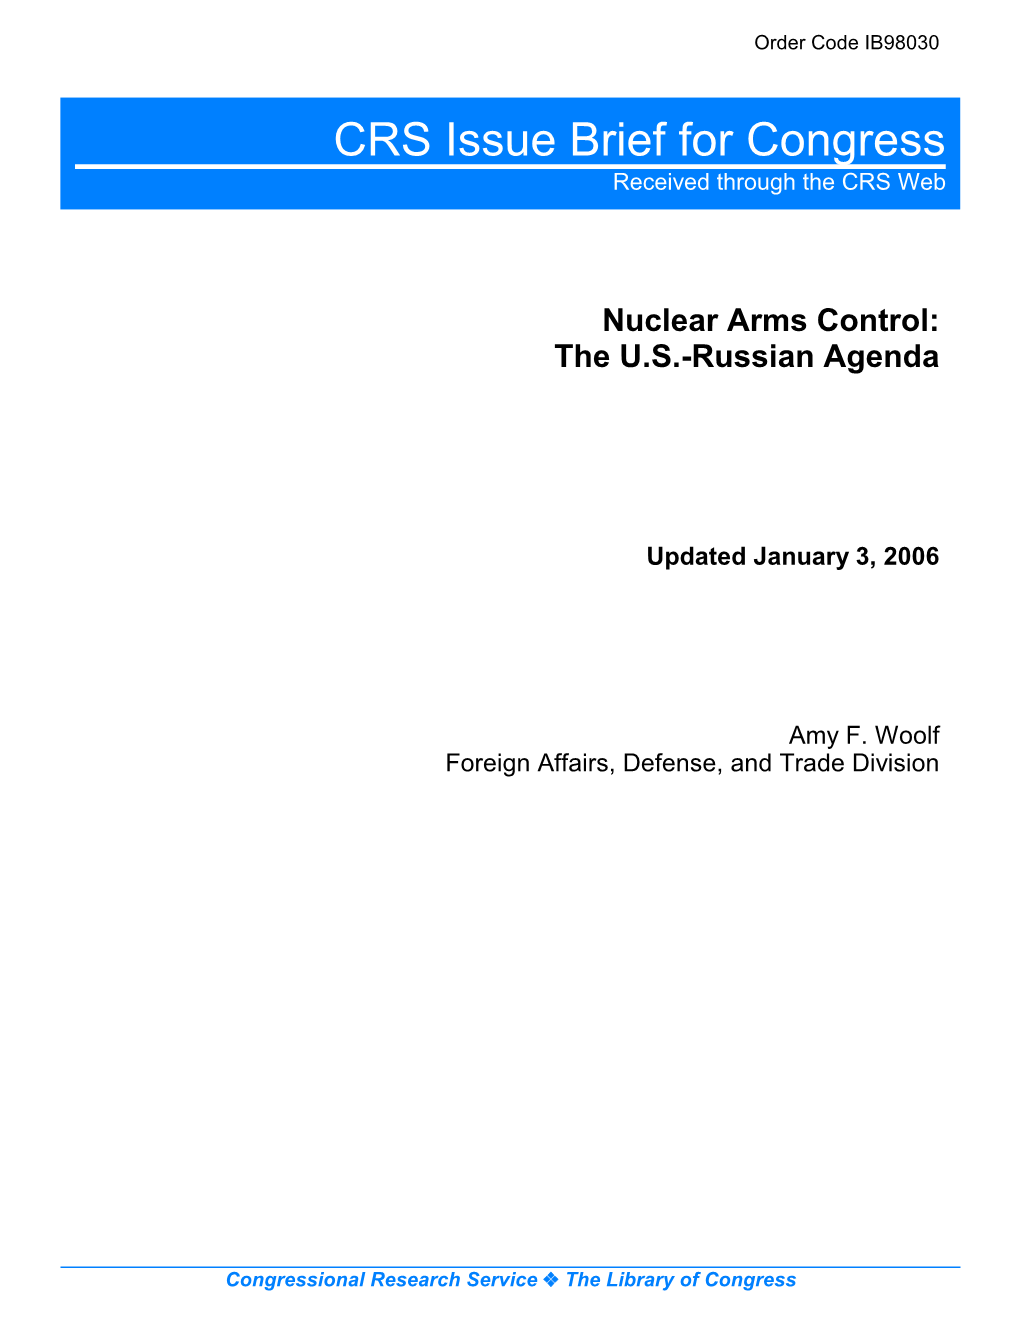 Nuclear Arms Control: the U.S.-Russian Agenda